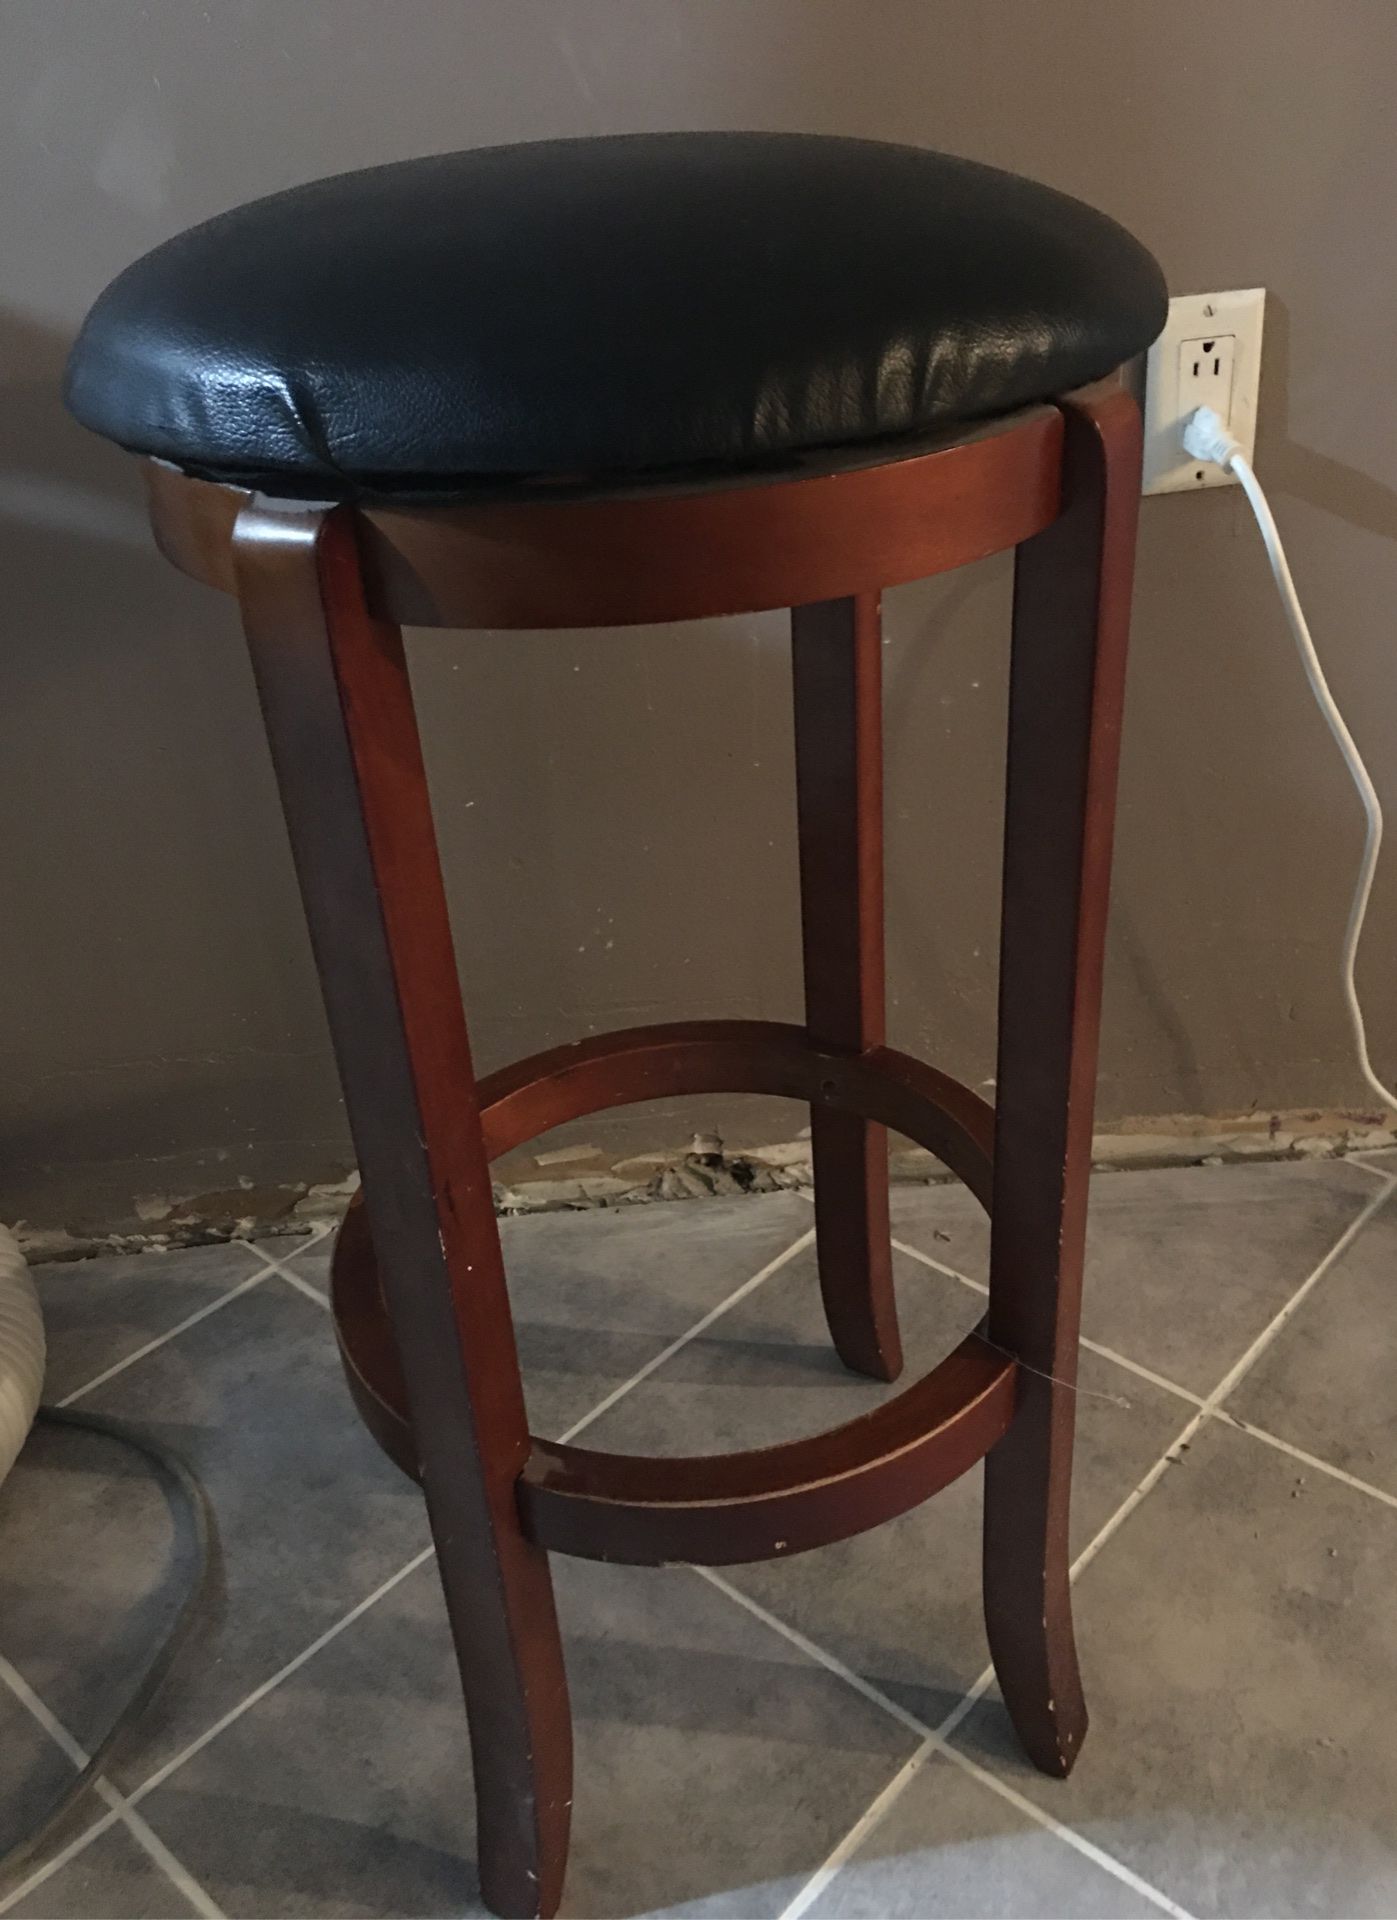 Spinning stool